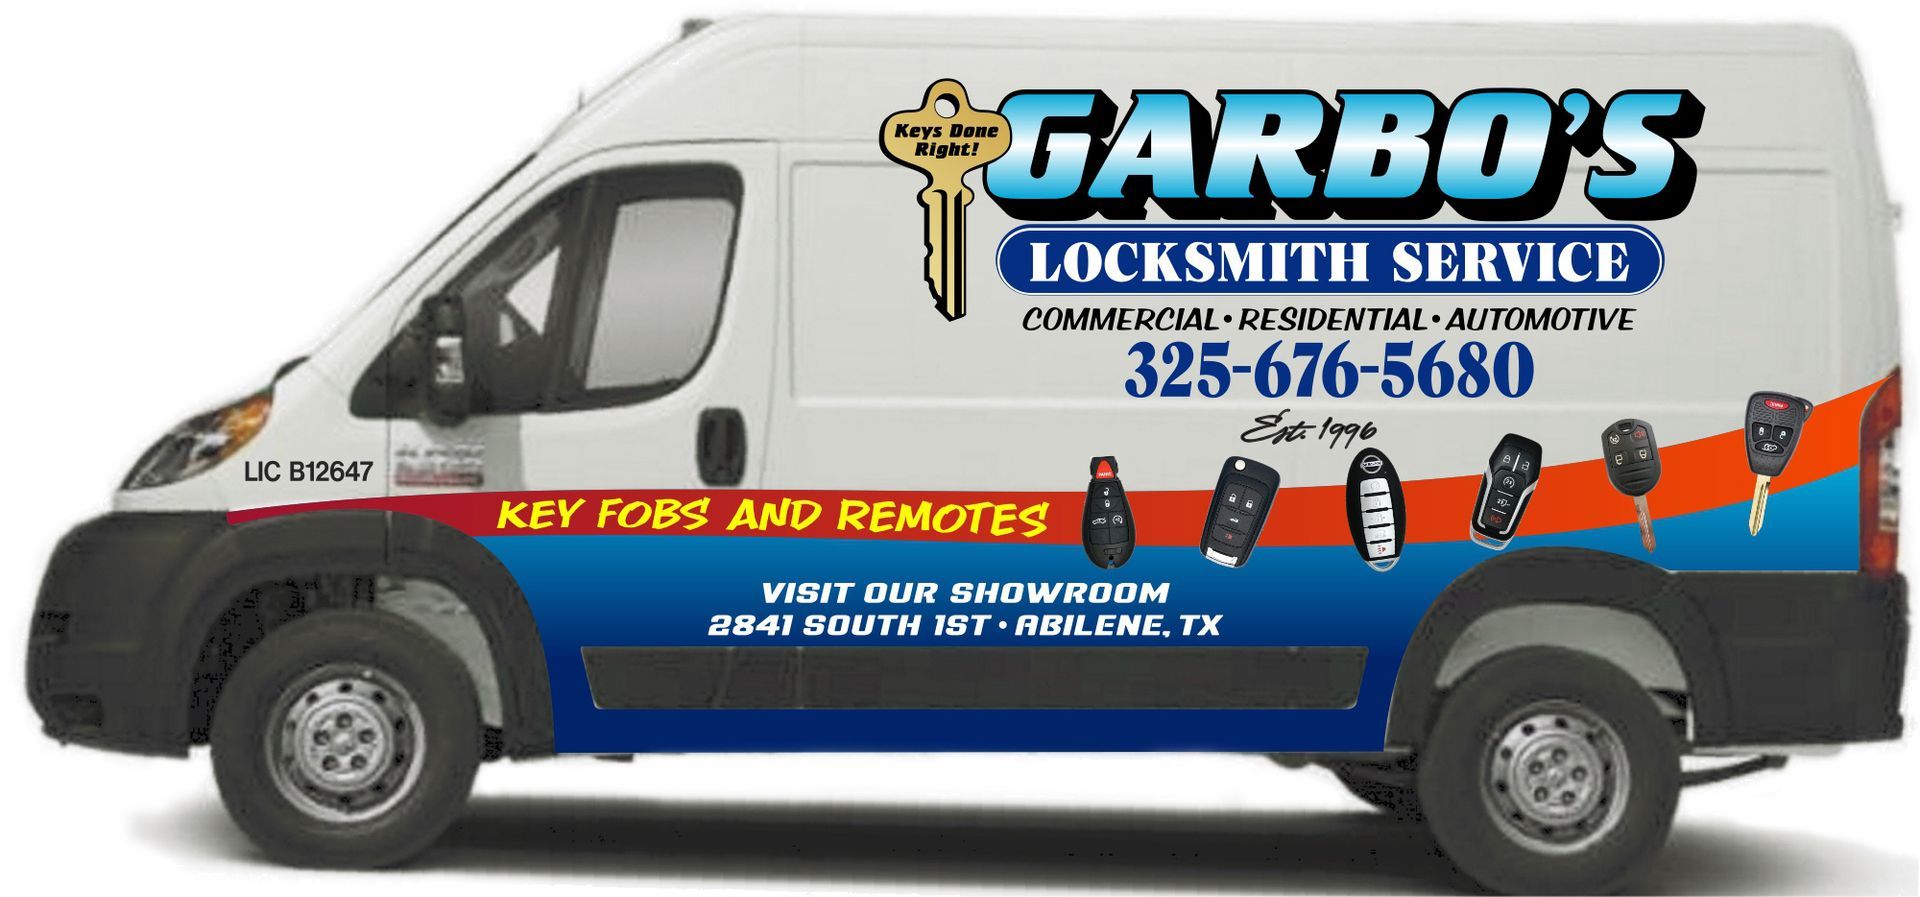 Garbo's Locksmith Service - Van